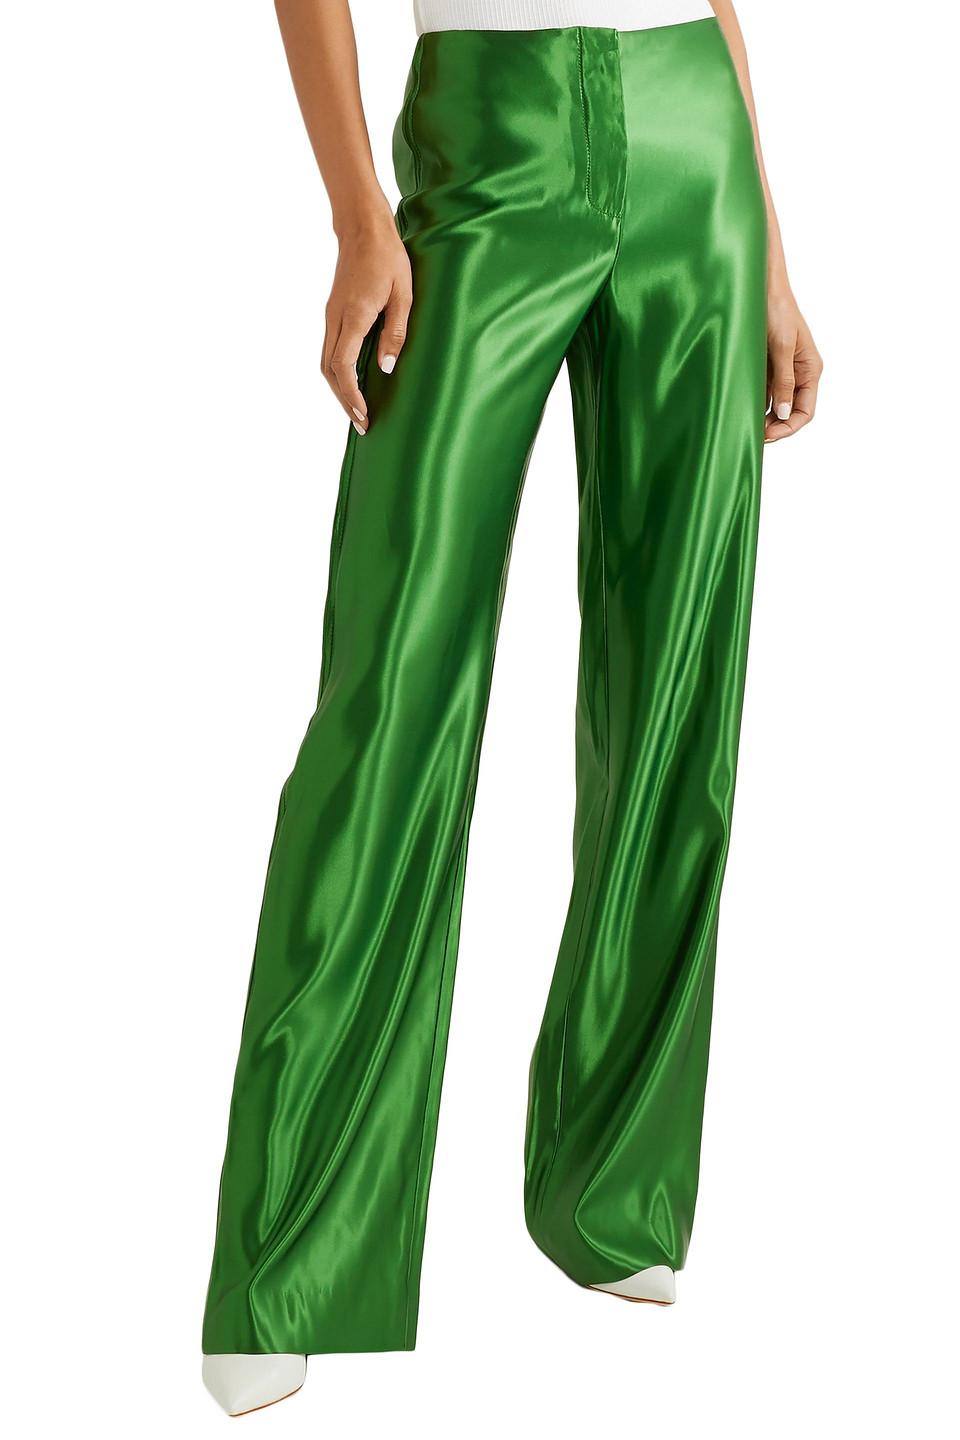 Jason Wu Satin Wide-leg Pants in Bright Green (Green) - Lyst